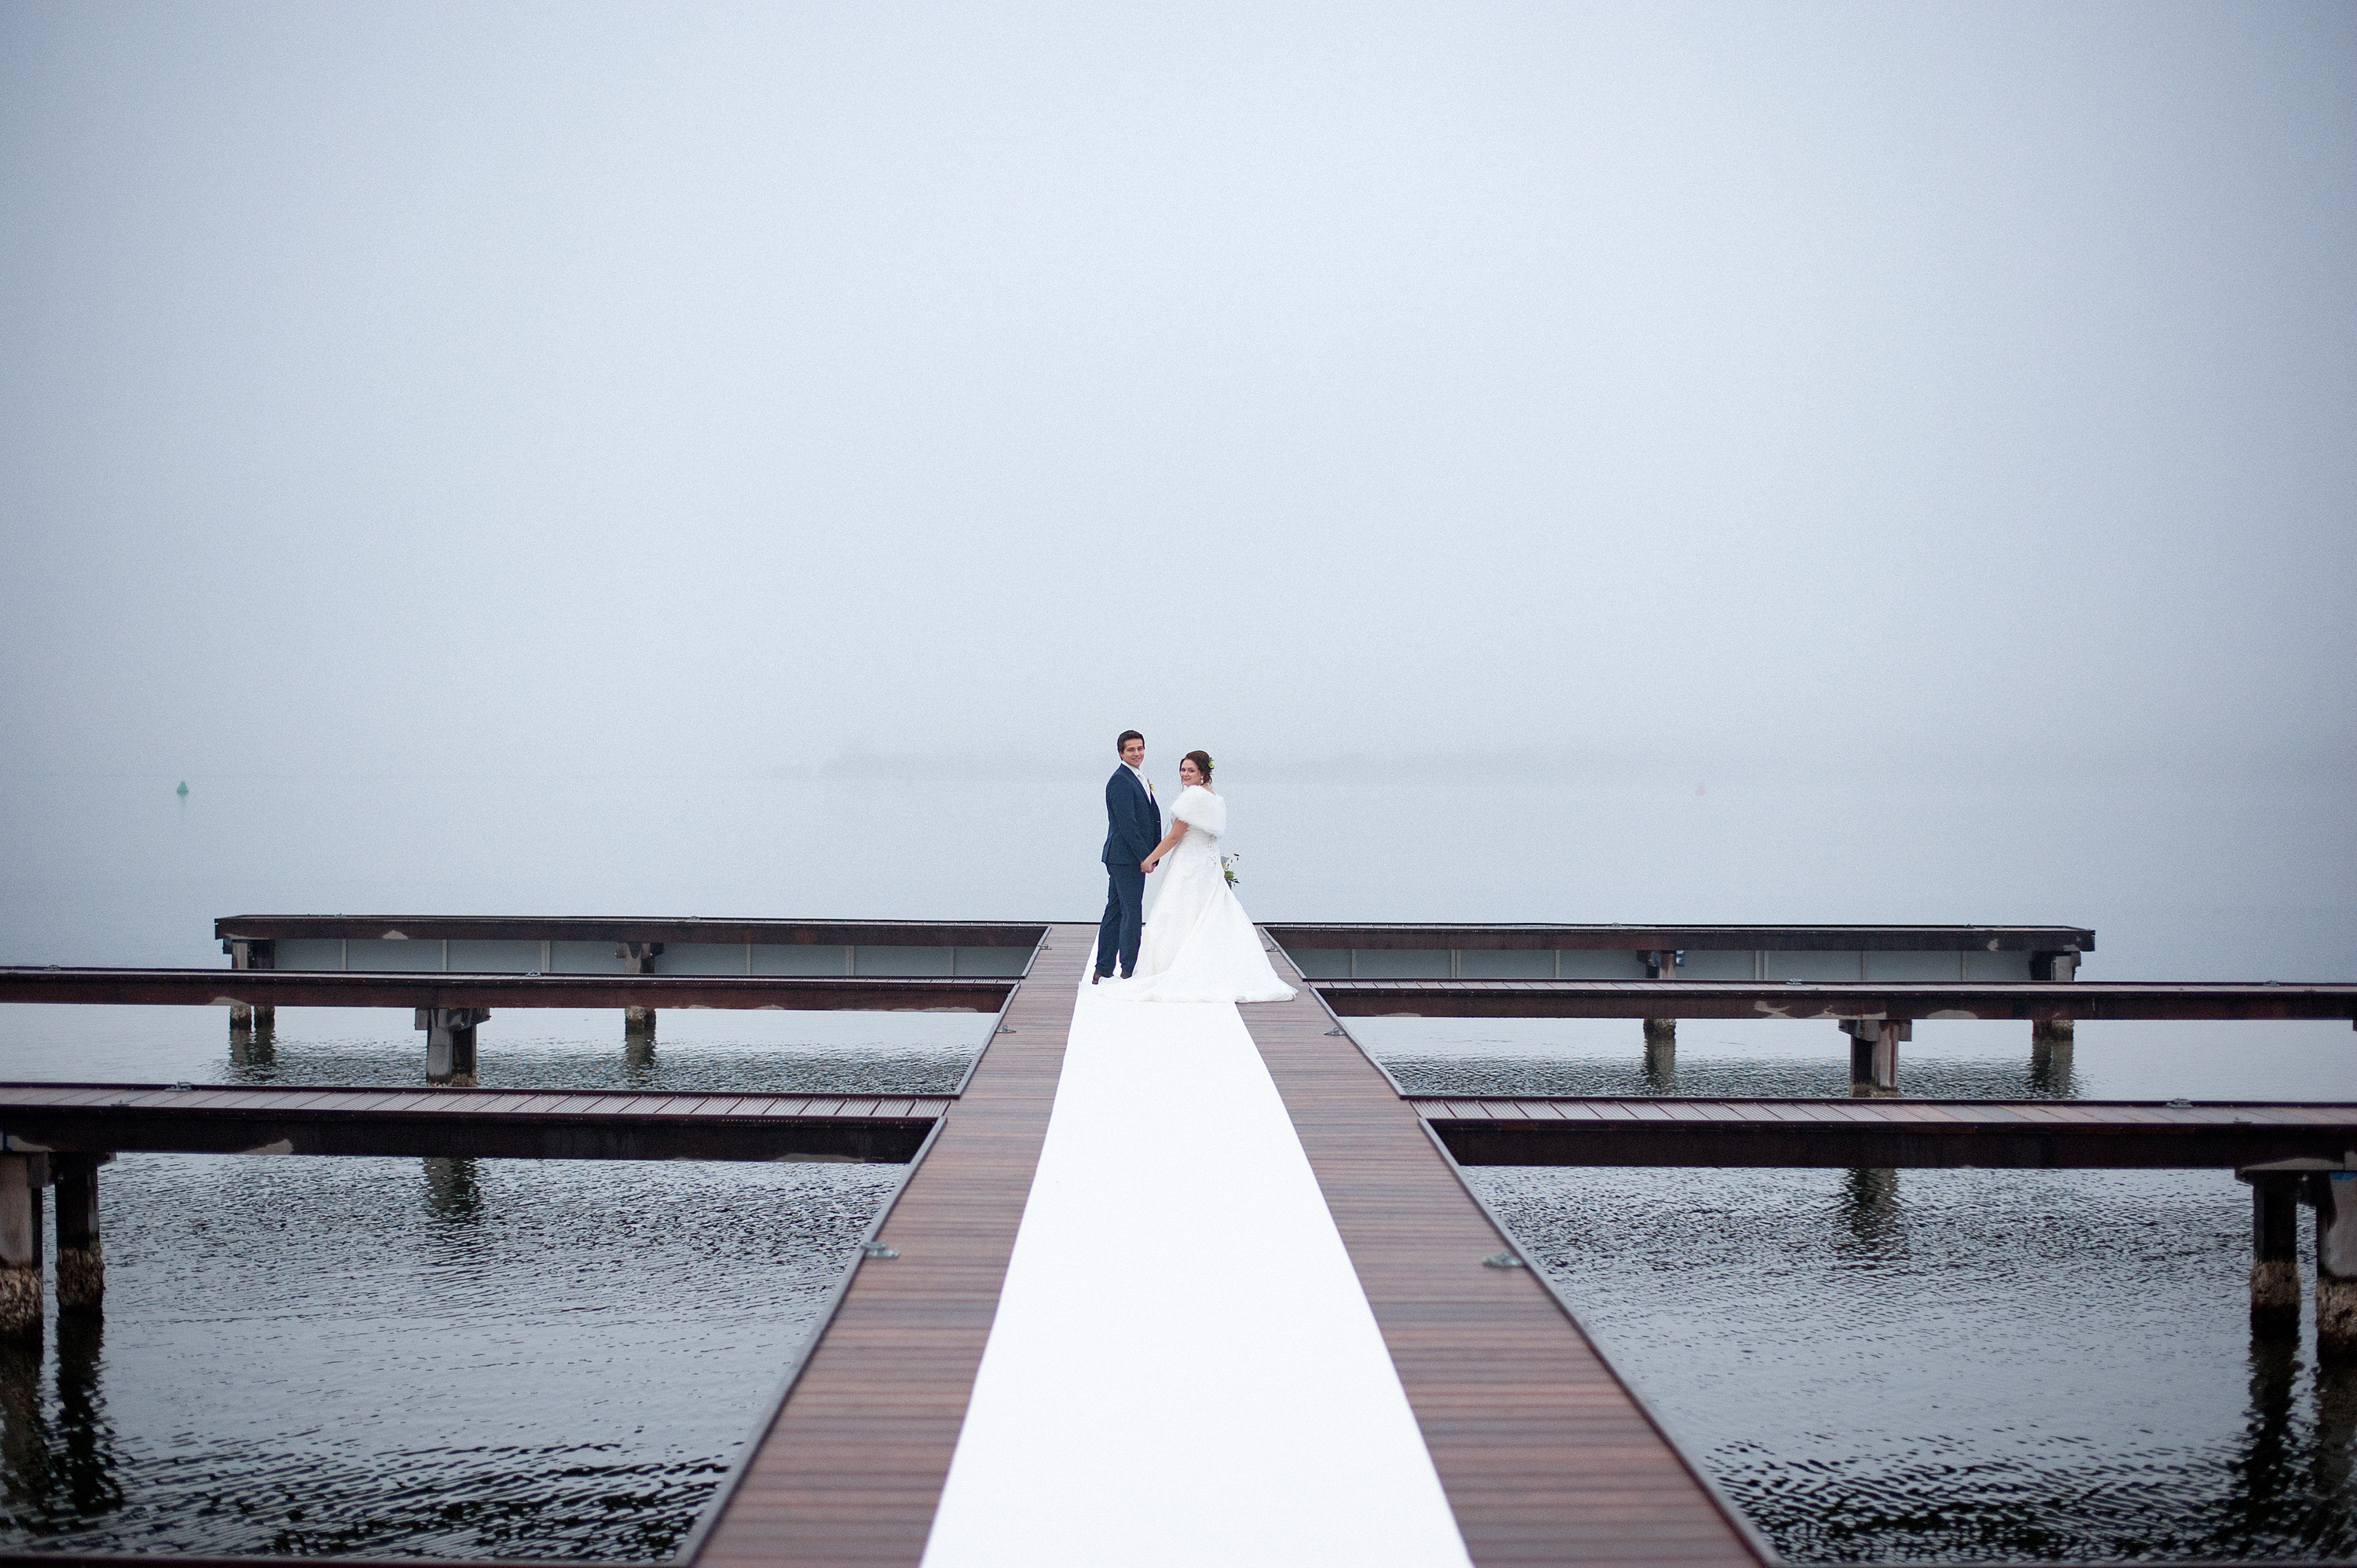 Getting married at Lake Veere